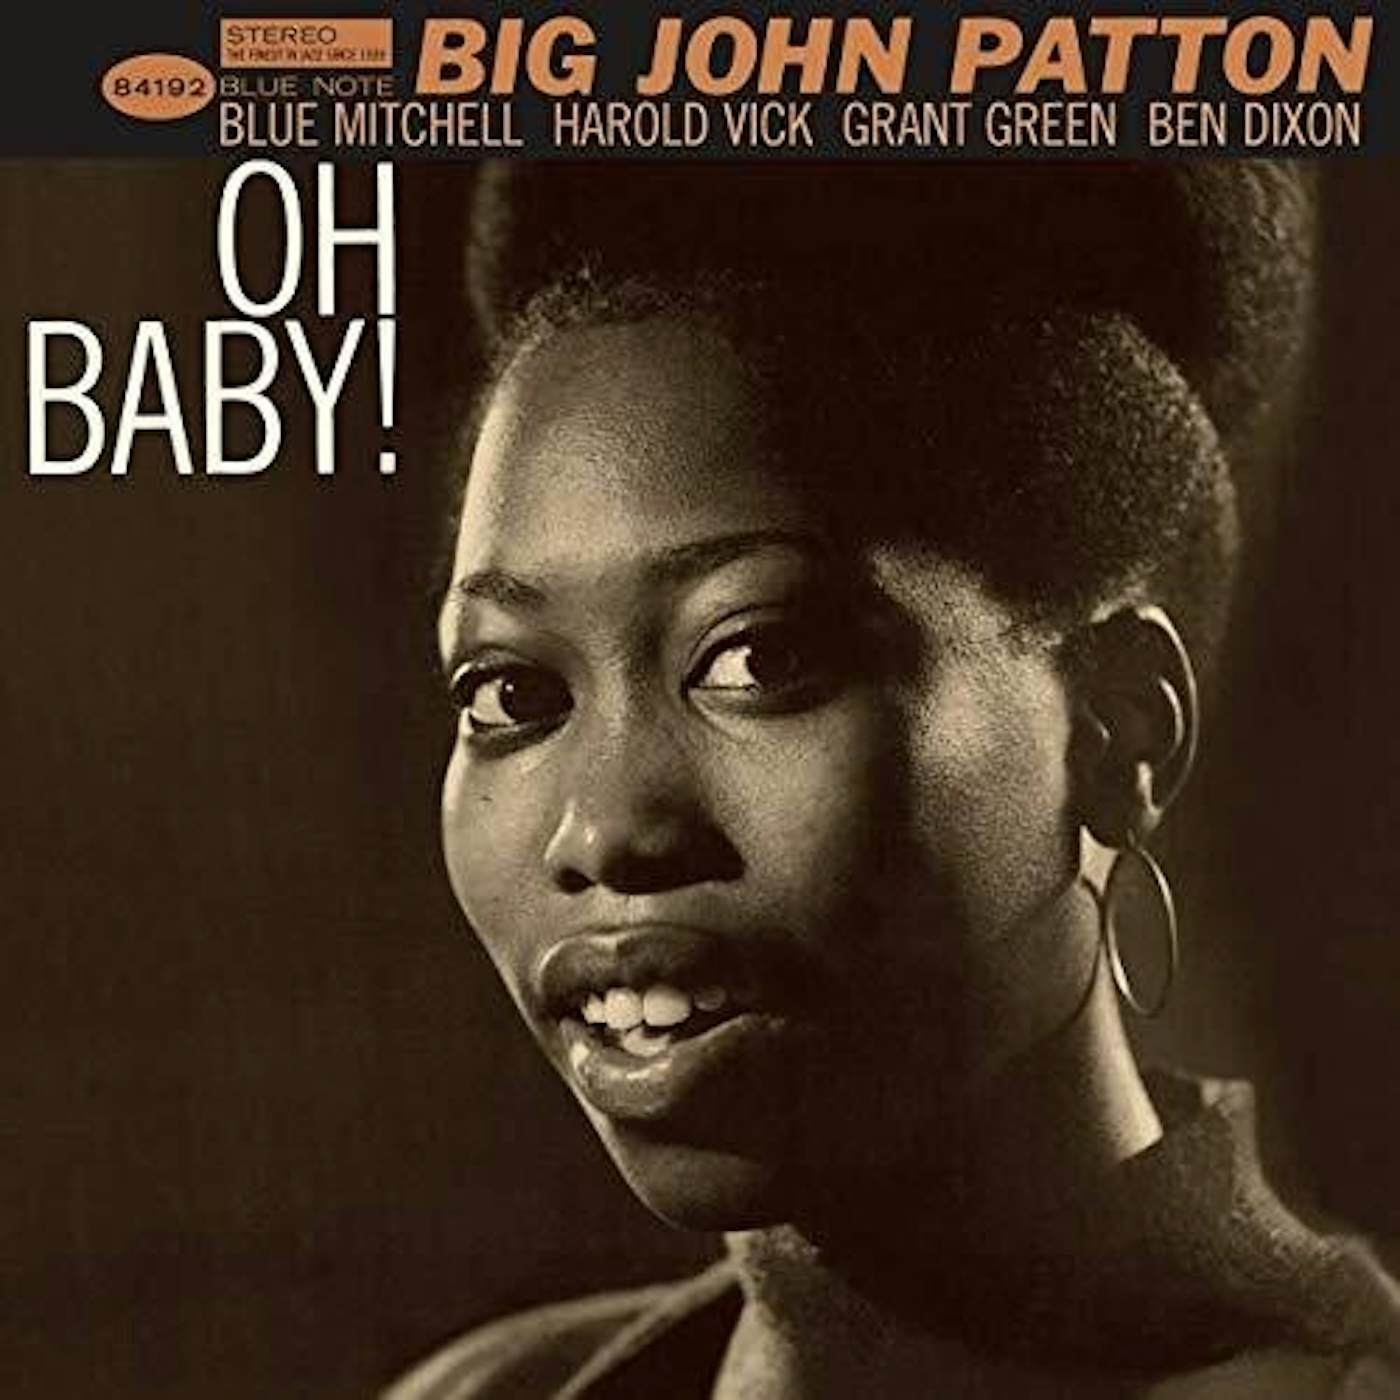 Big John Patton OH BABY Vinyl Record